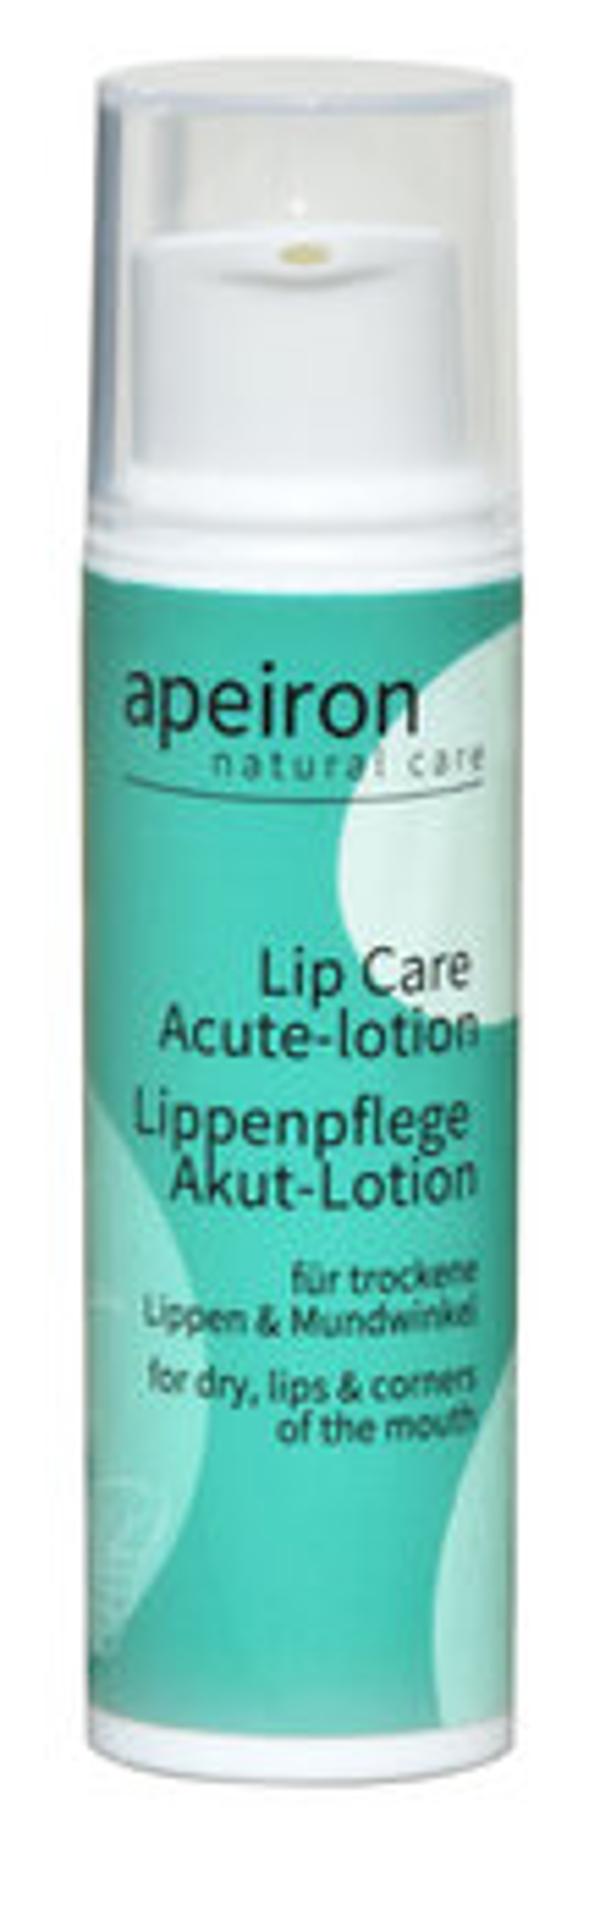 Produktfoto zu Lippenpflege Akut Lotion